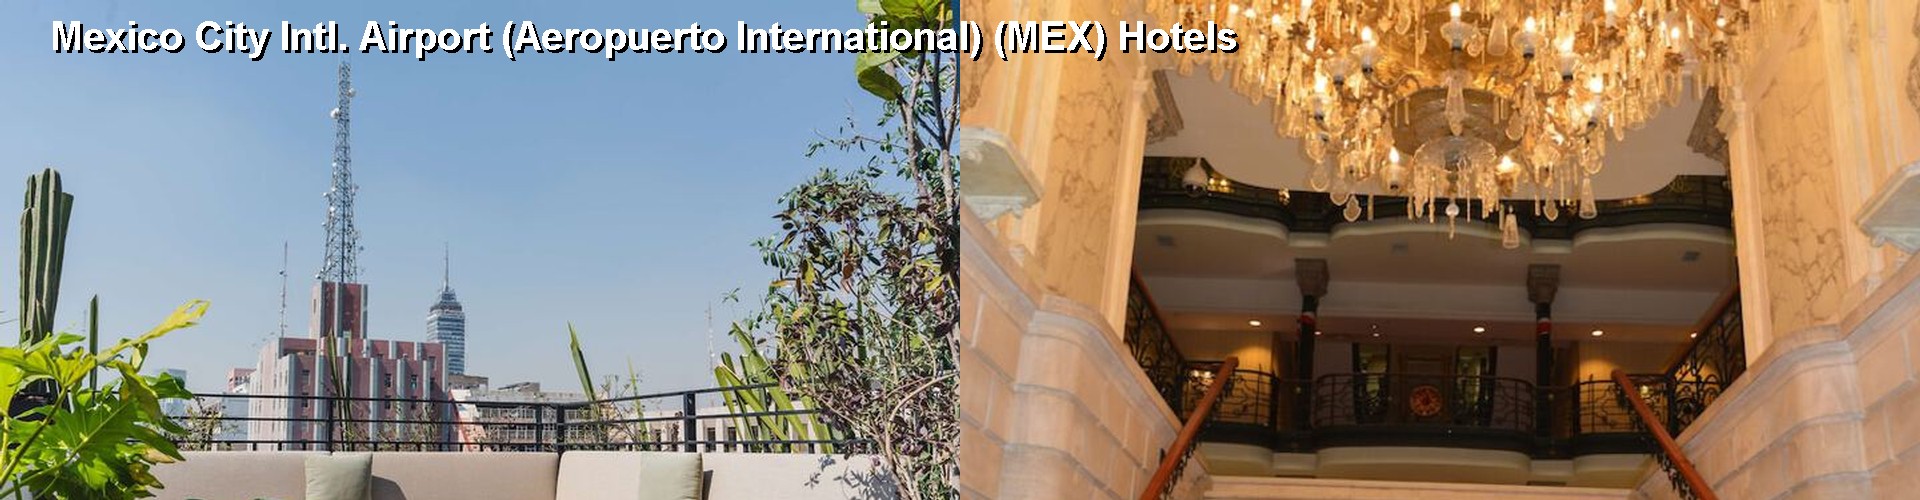 5 Best Hotels near Mexico City Intl. Airport (Aeropuerto International) (MEX)